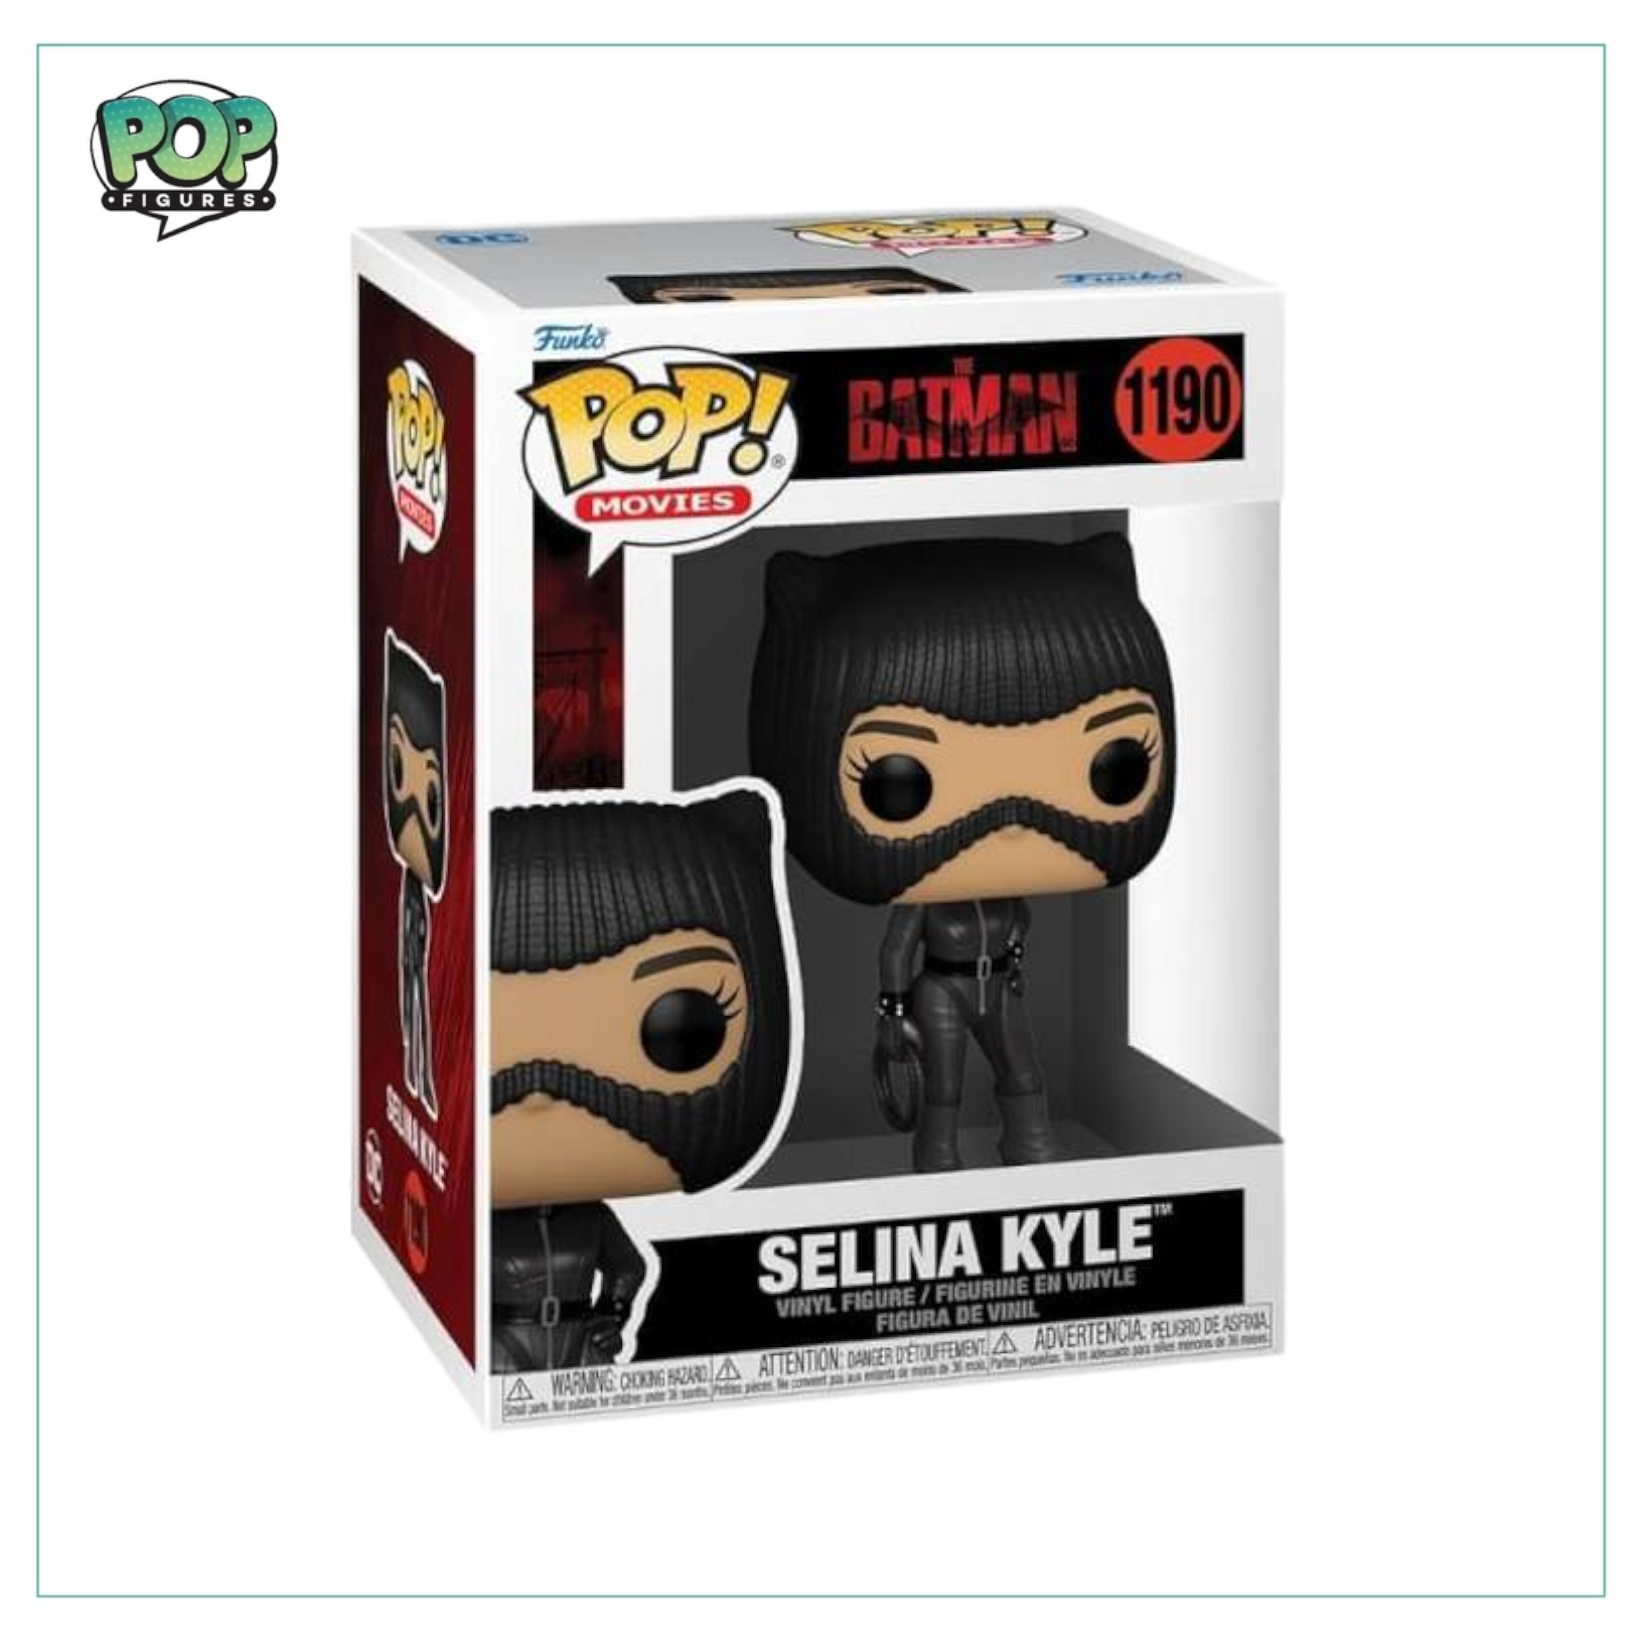 Selina Kyle #1190 Funko Pop! The Batman